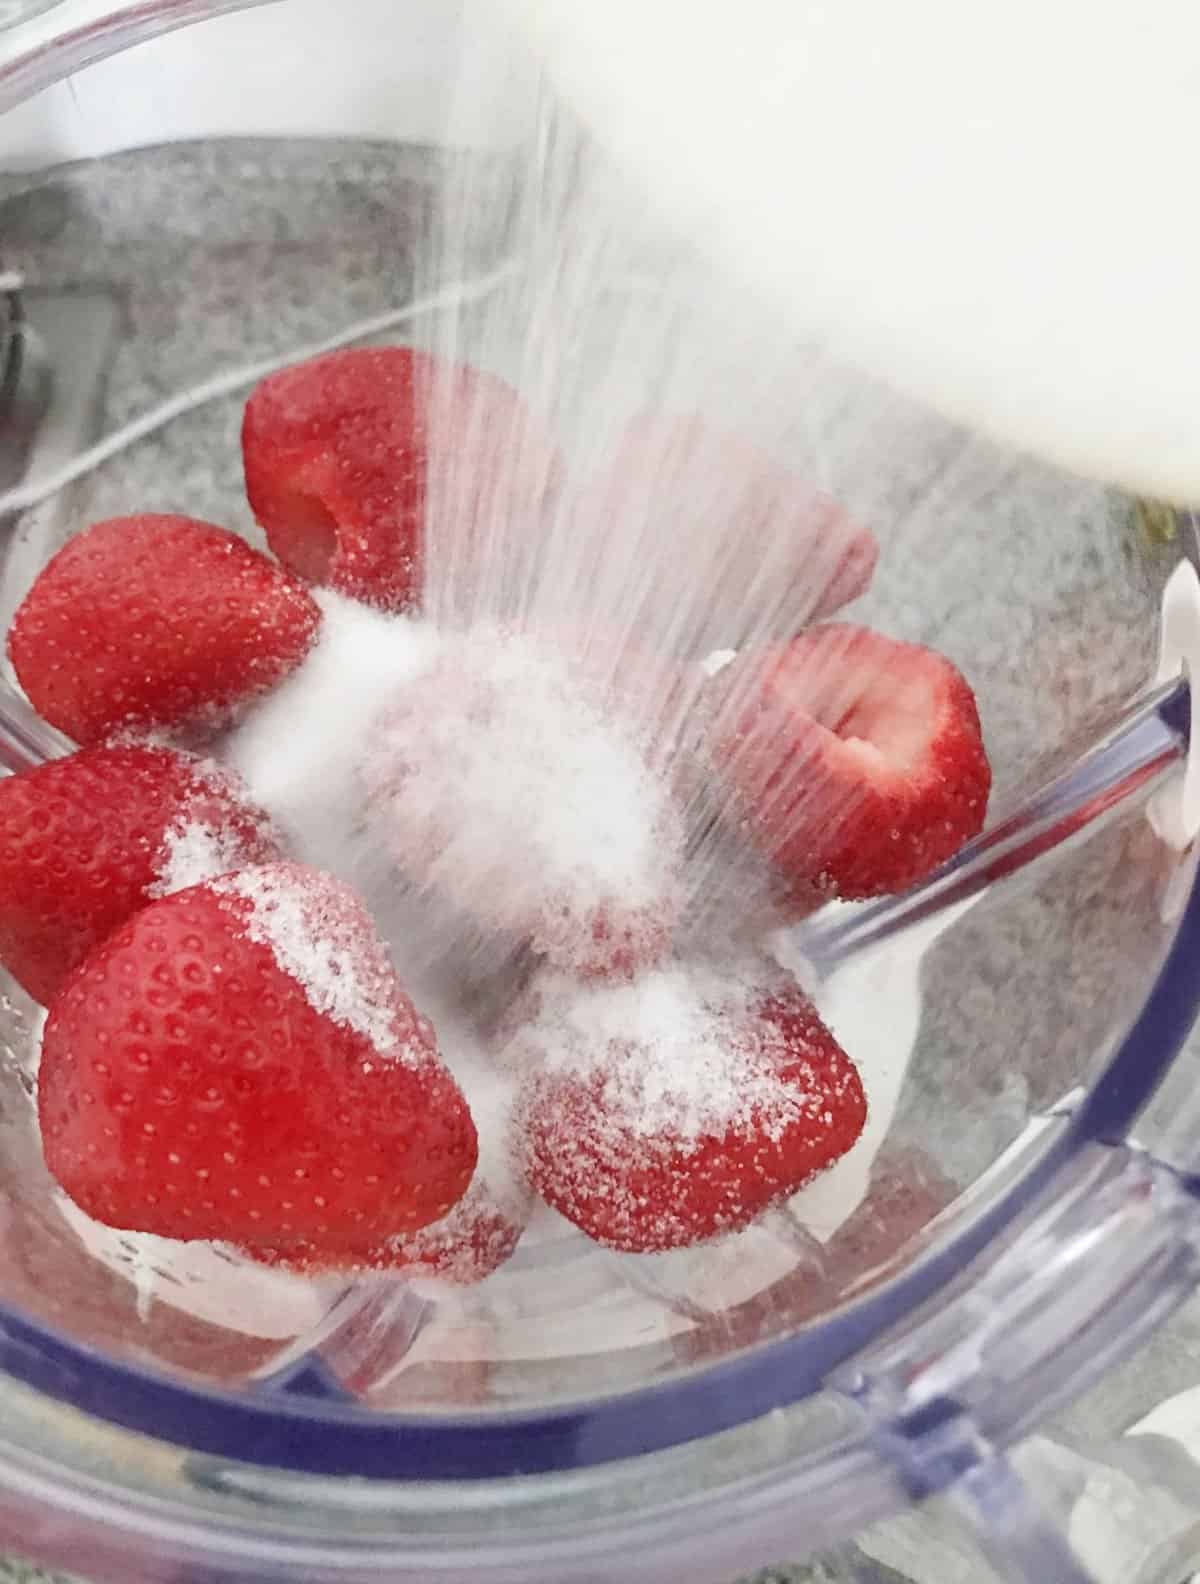 Adding sugar to whole strawberries in blender jar. 